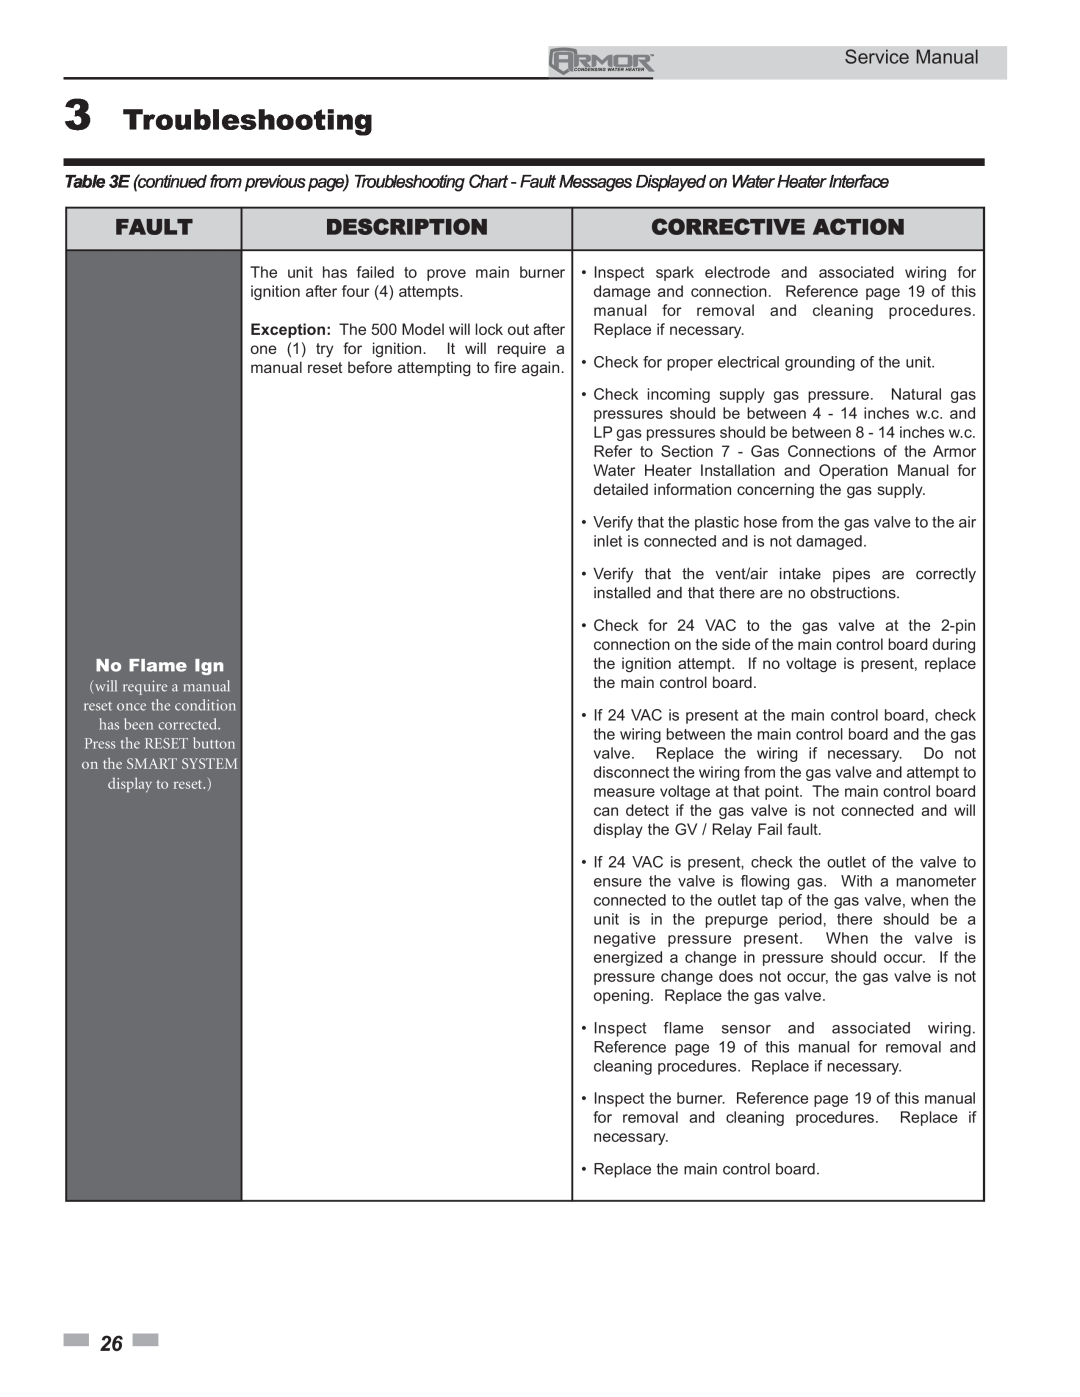 Lochinvar 150 - 500 service manual 3Troubleshooting, Fault, Description, Corrective Action, No Flame Ign 